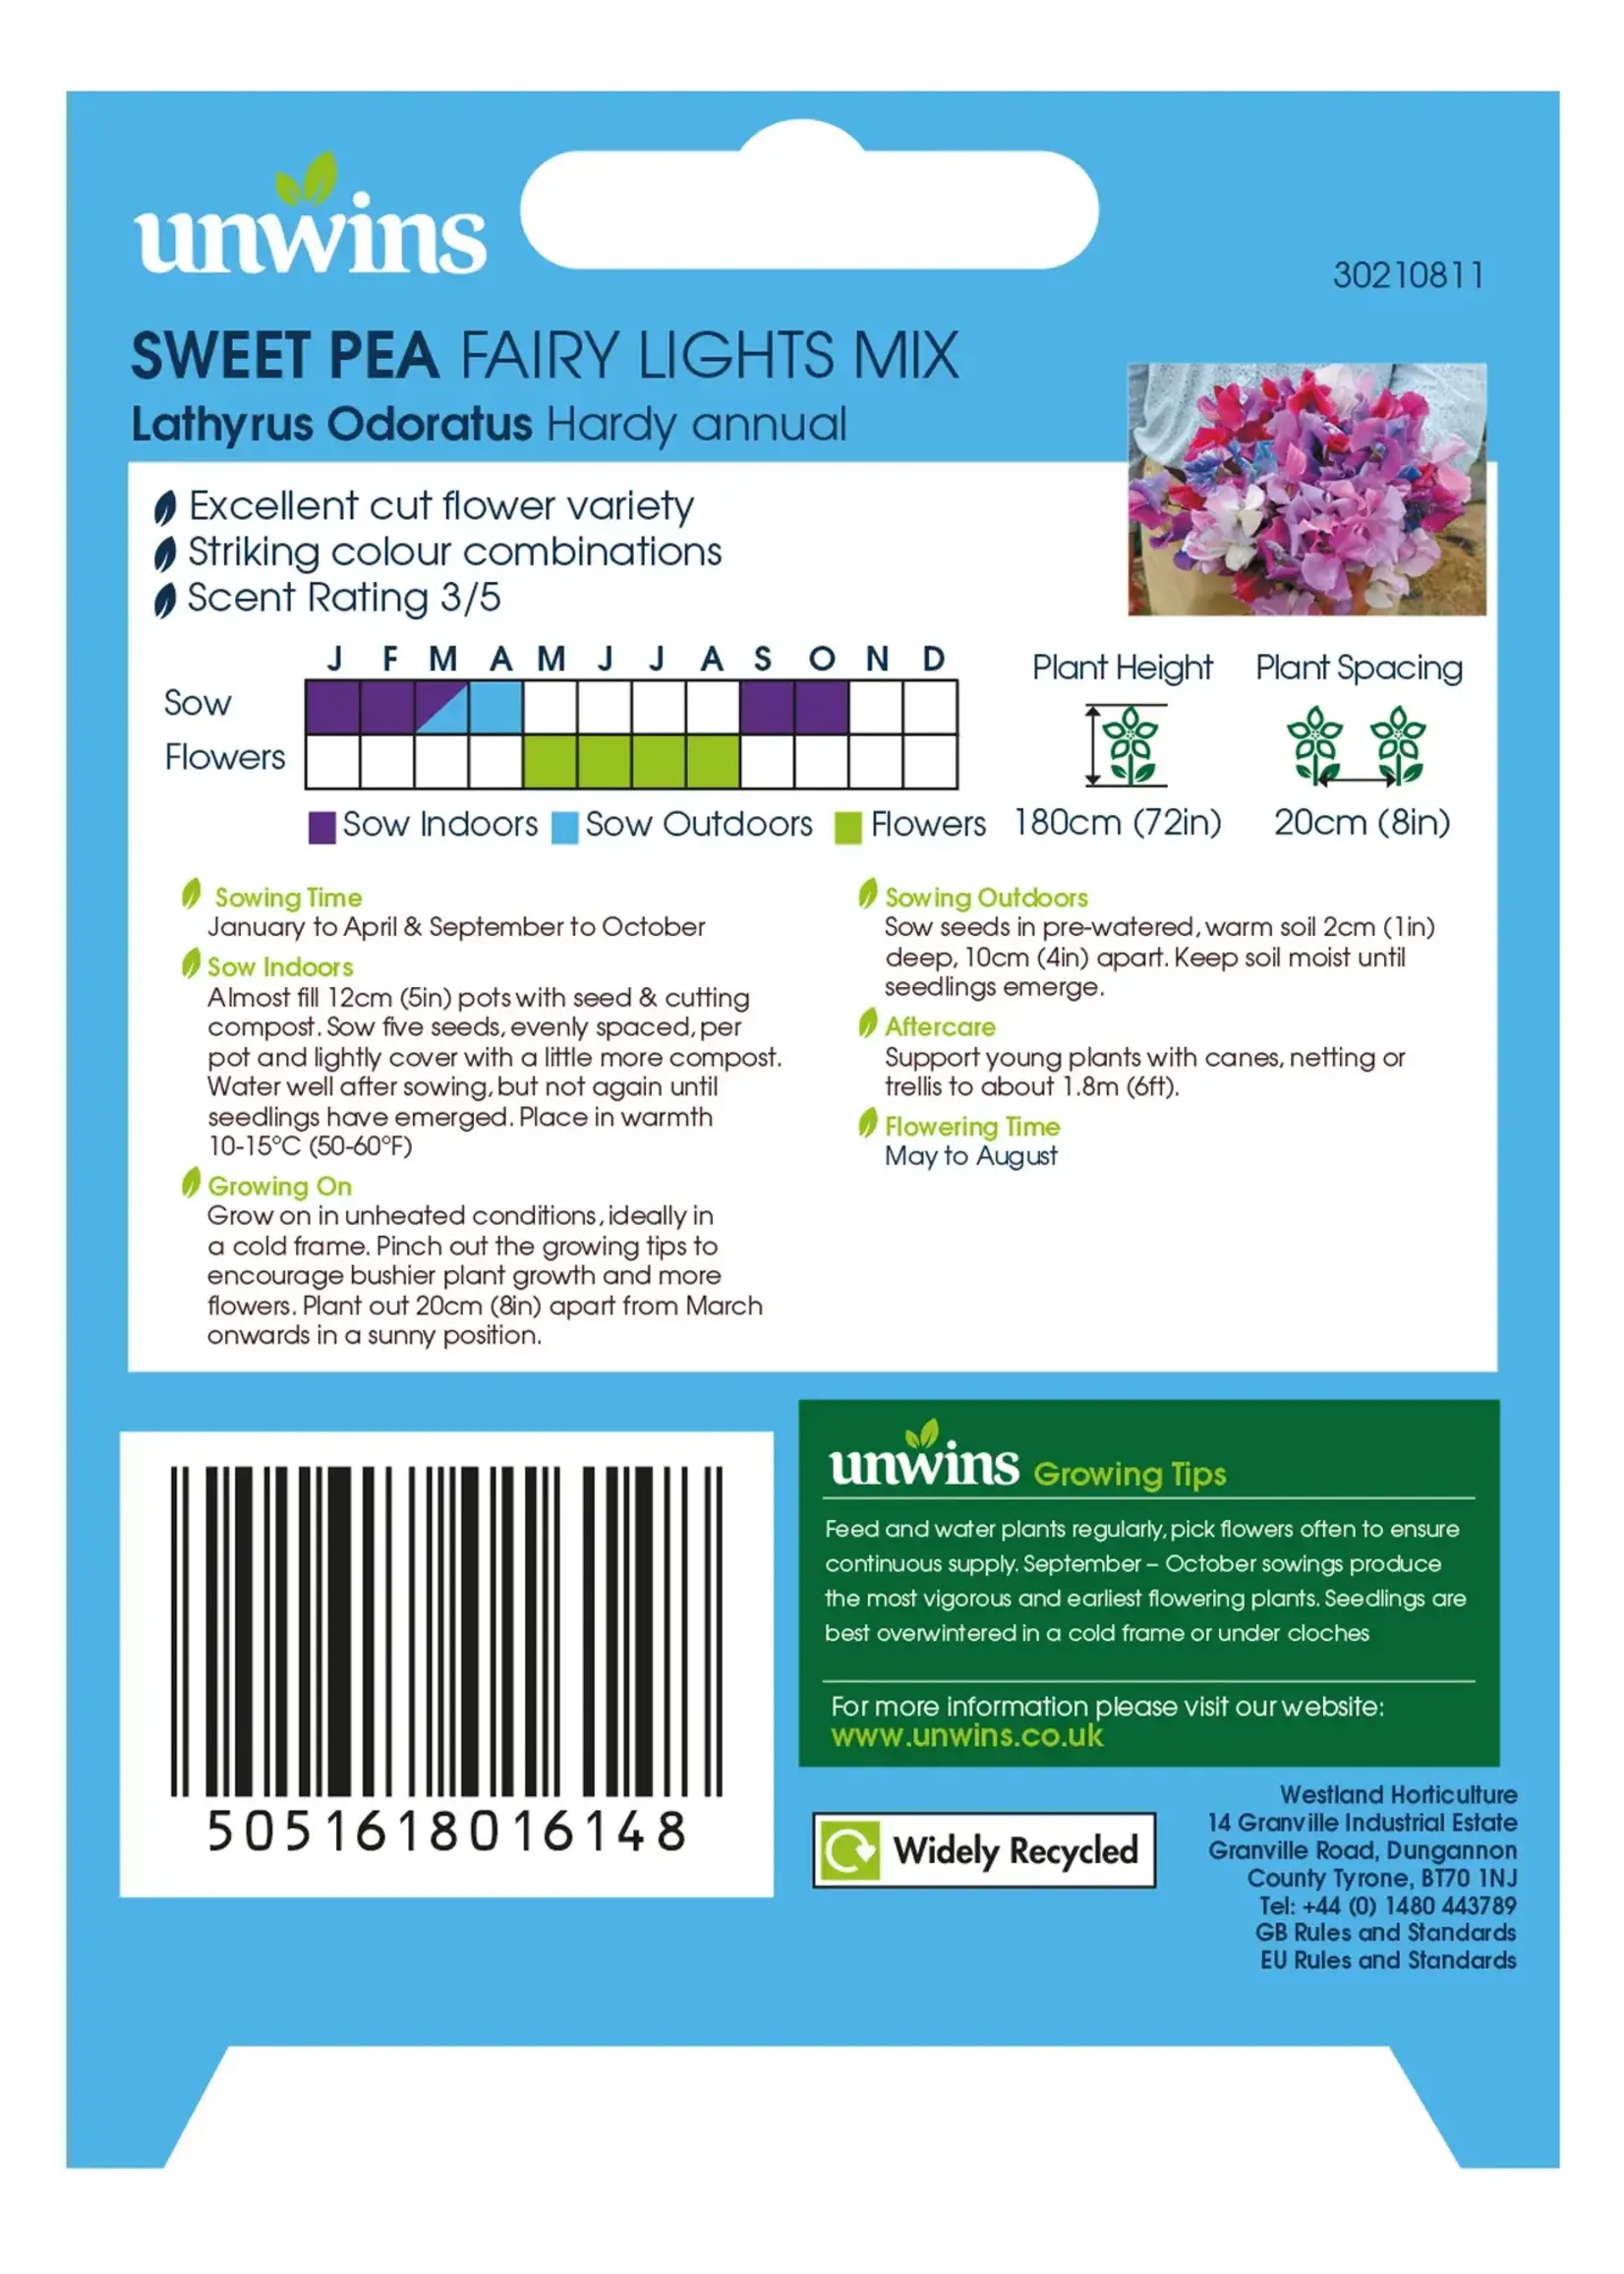 Unwins Sweet Pea - Fairy Lights Mix